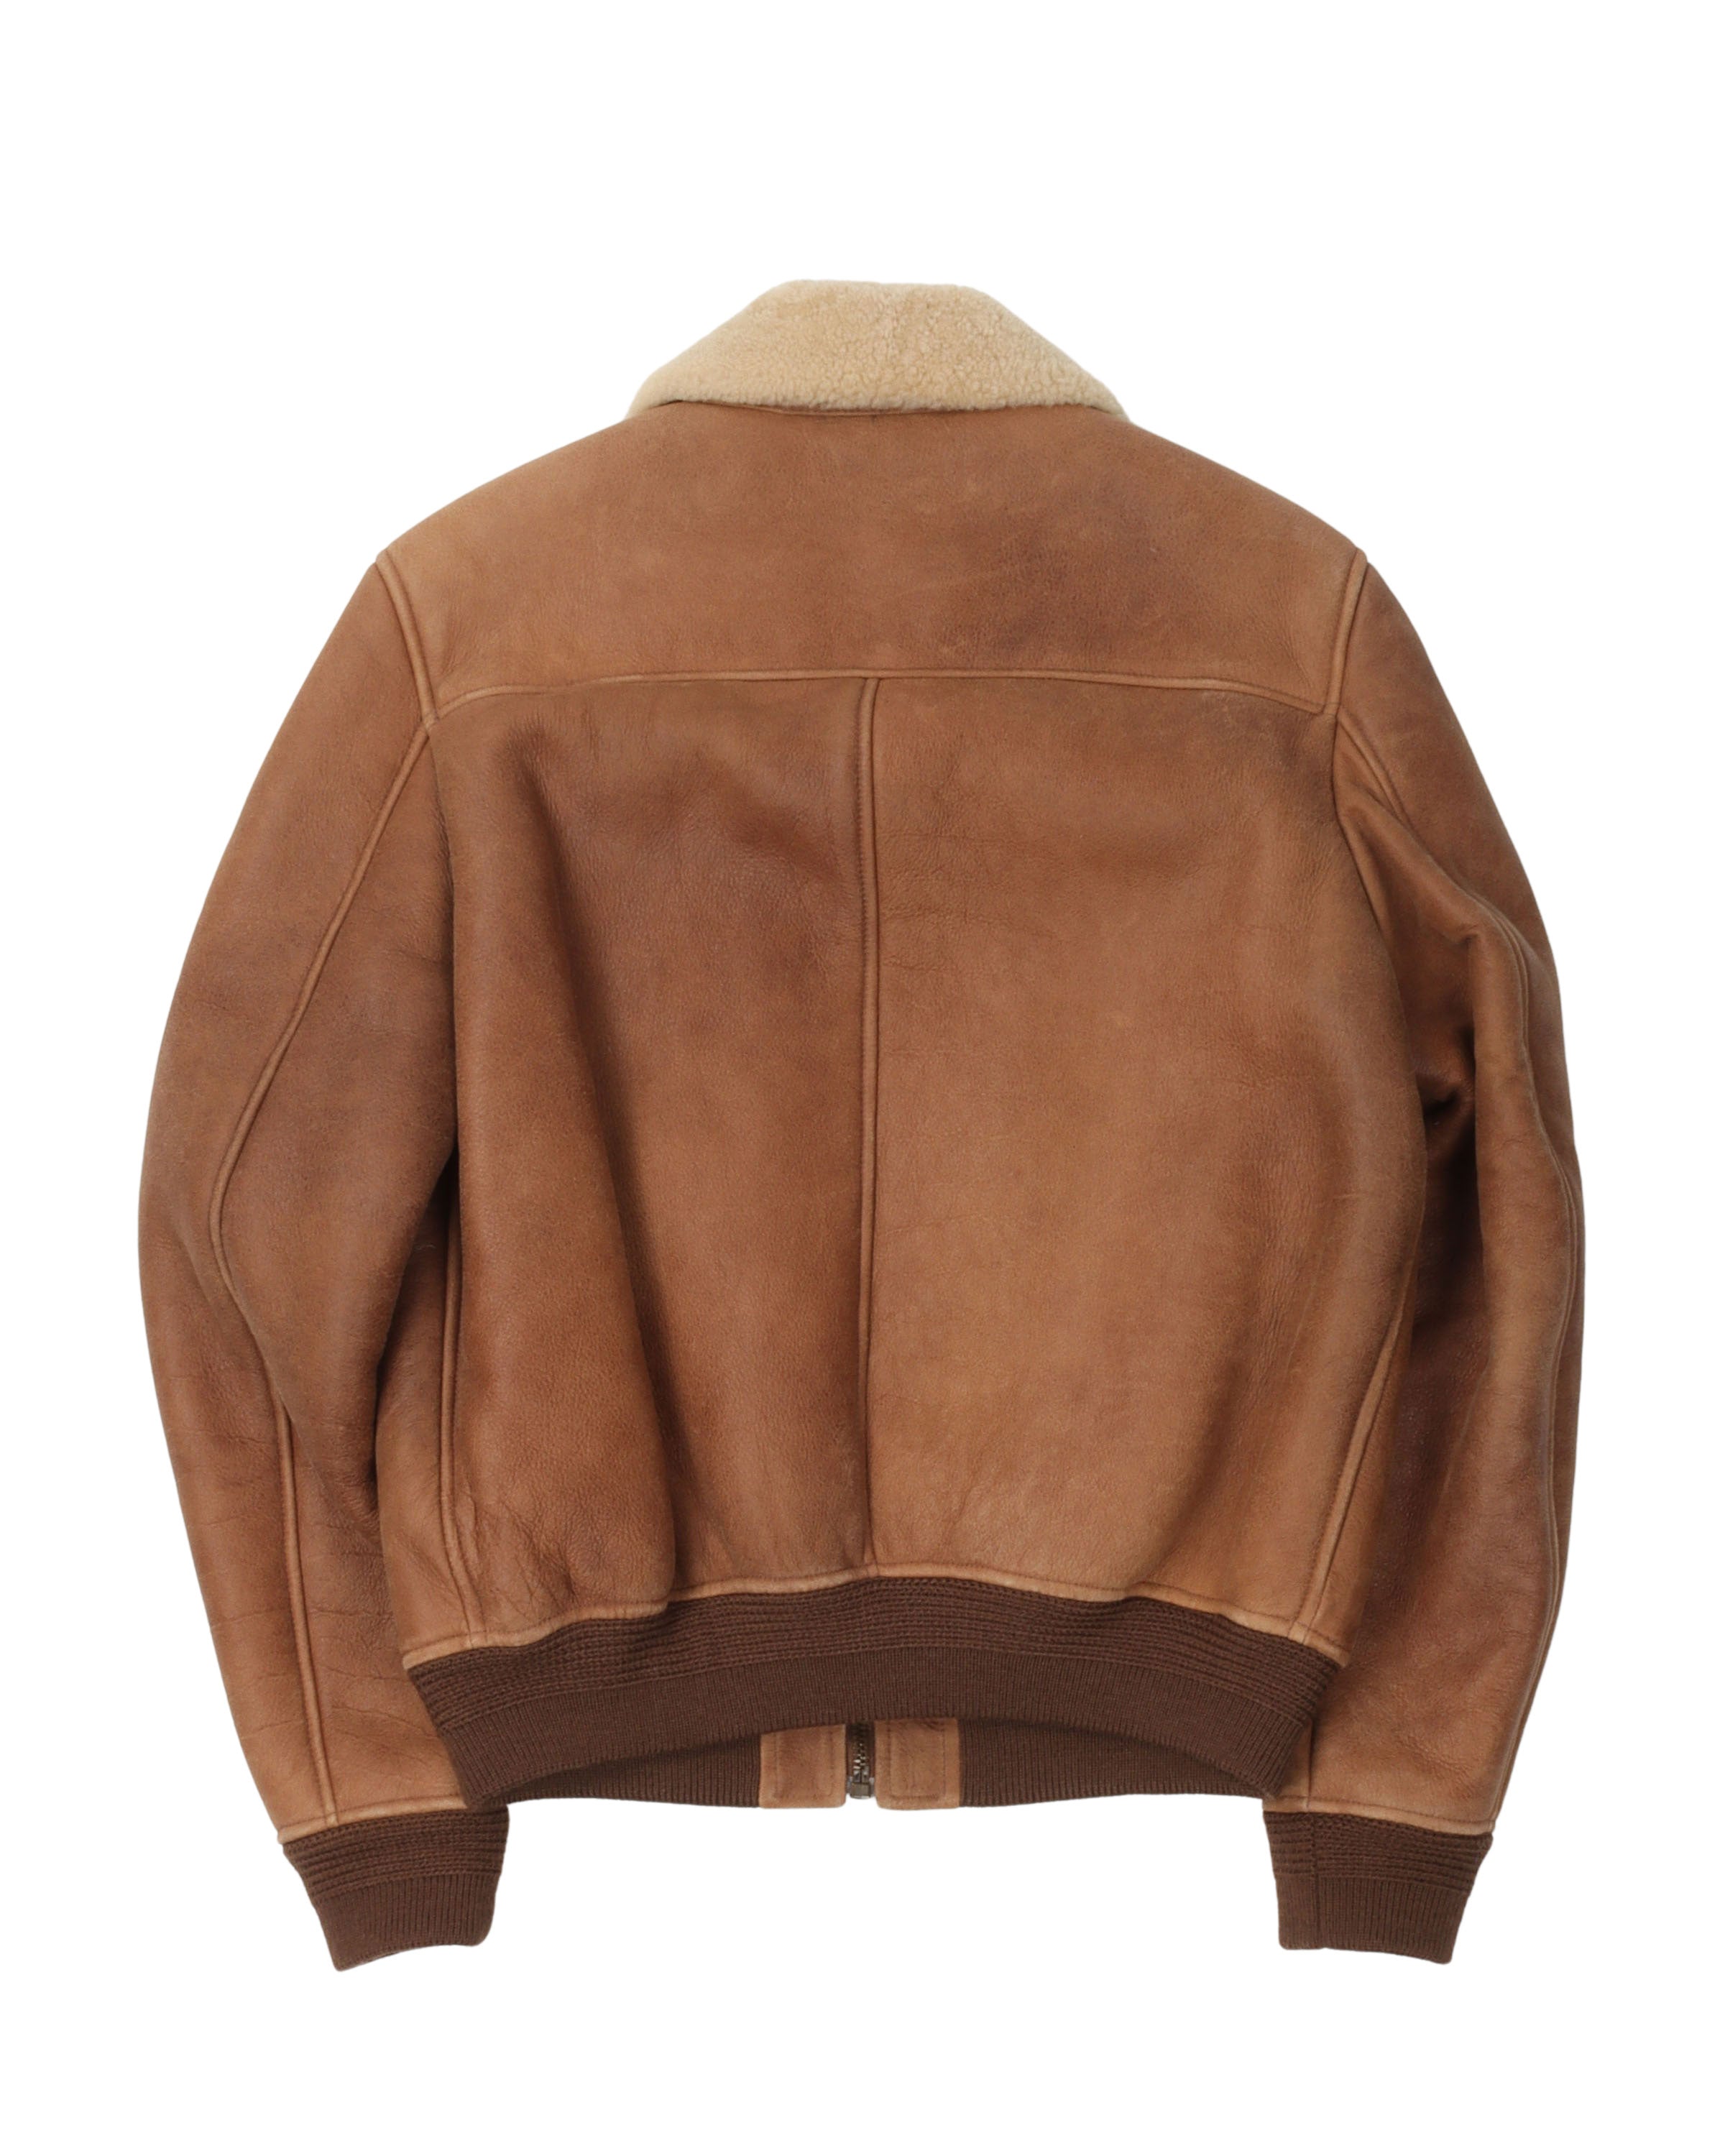 Shearling Bomber Leather Jacket (2020)